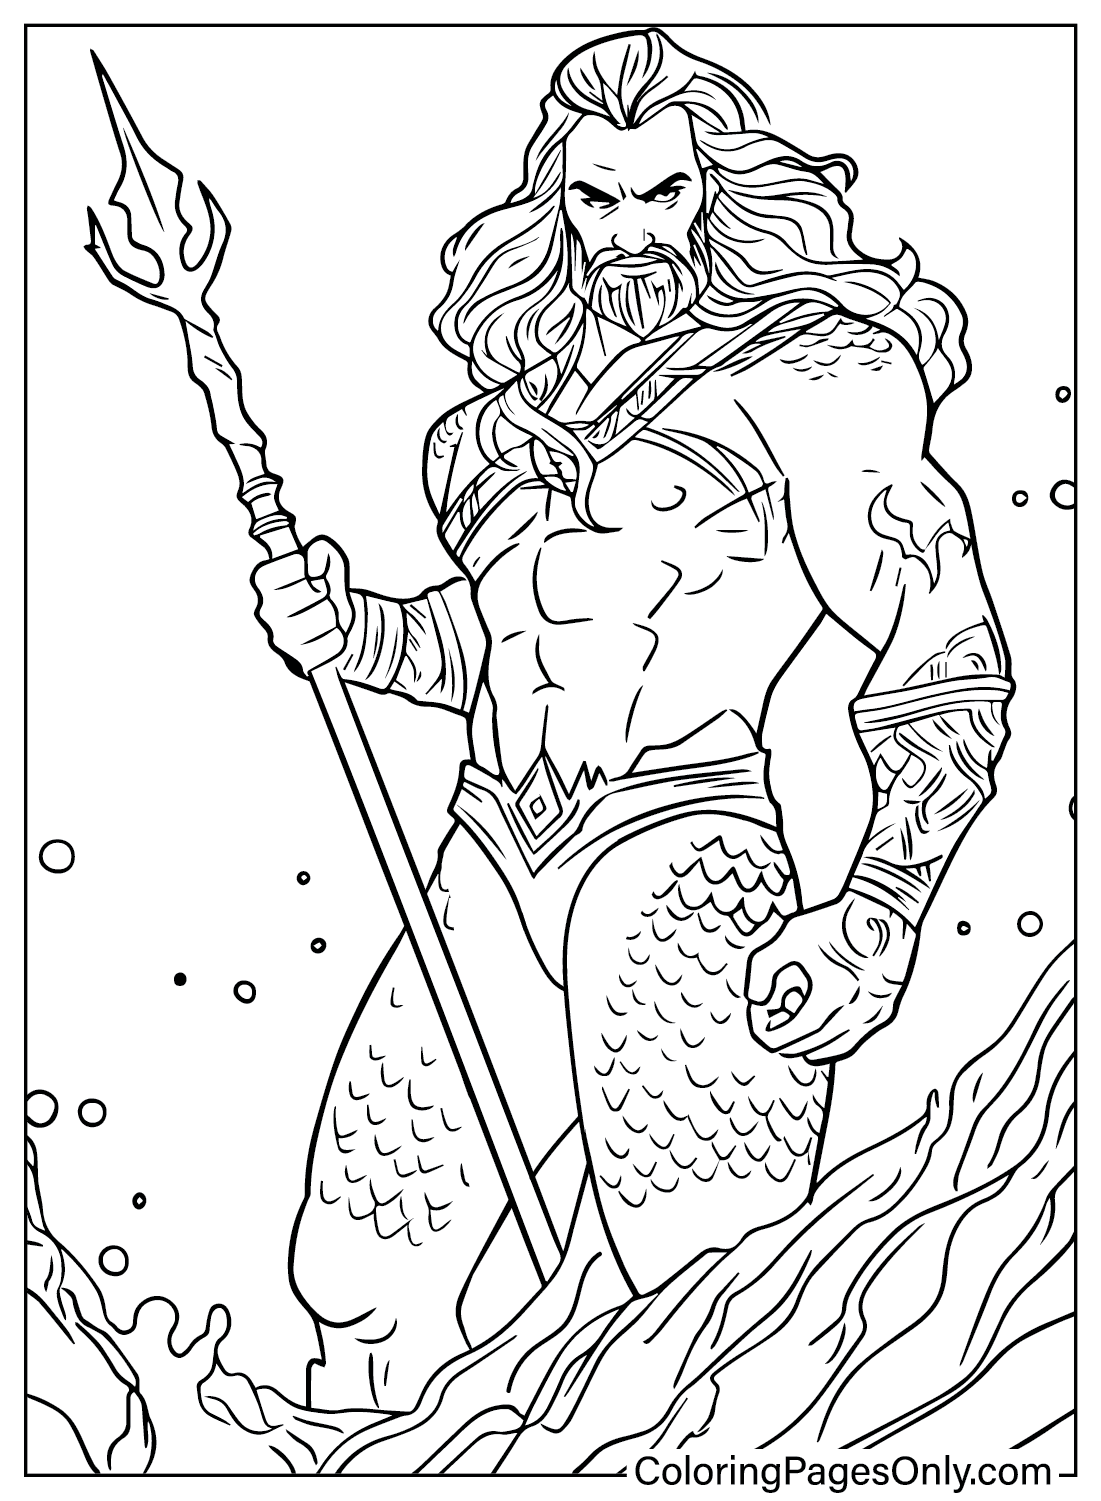 Folha de colorir Aquaman para crianças de Aquaman